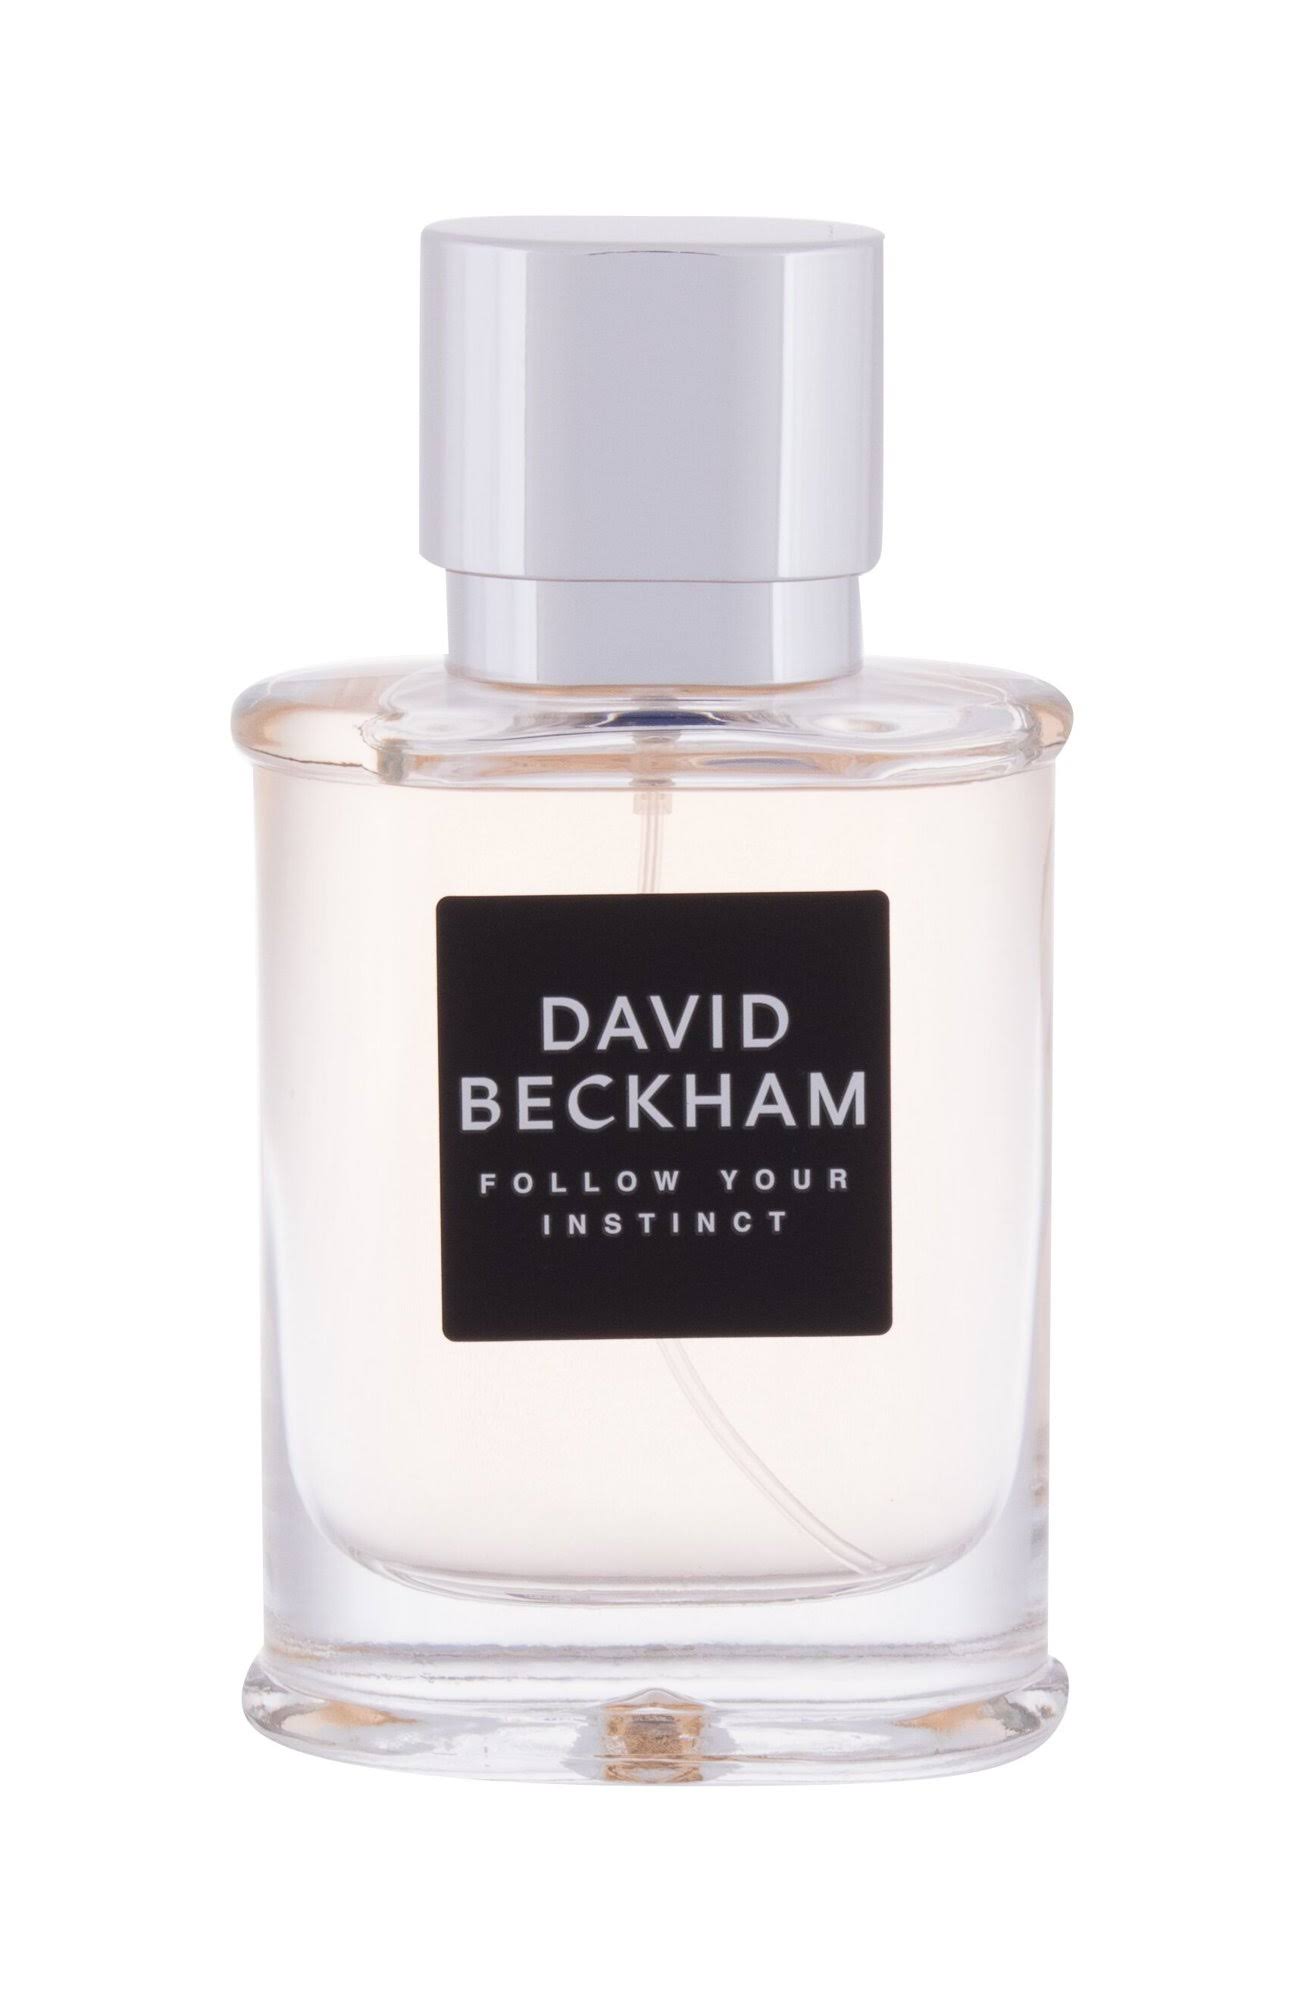 David Beckham Follow Your Instinct Eau de Toilette 50ml Spray